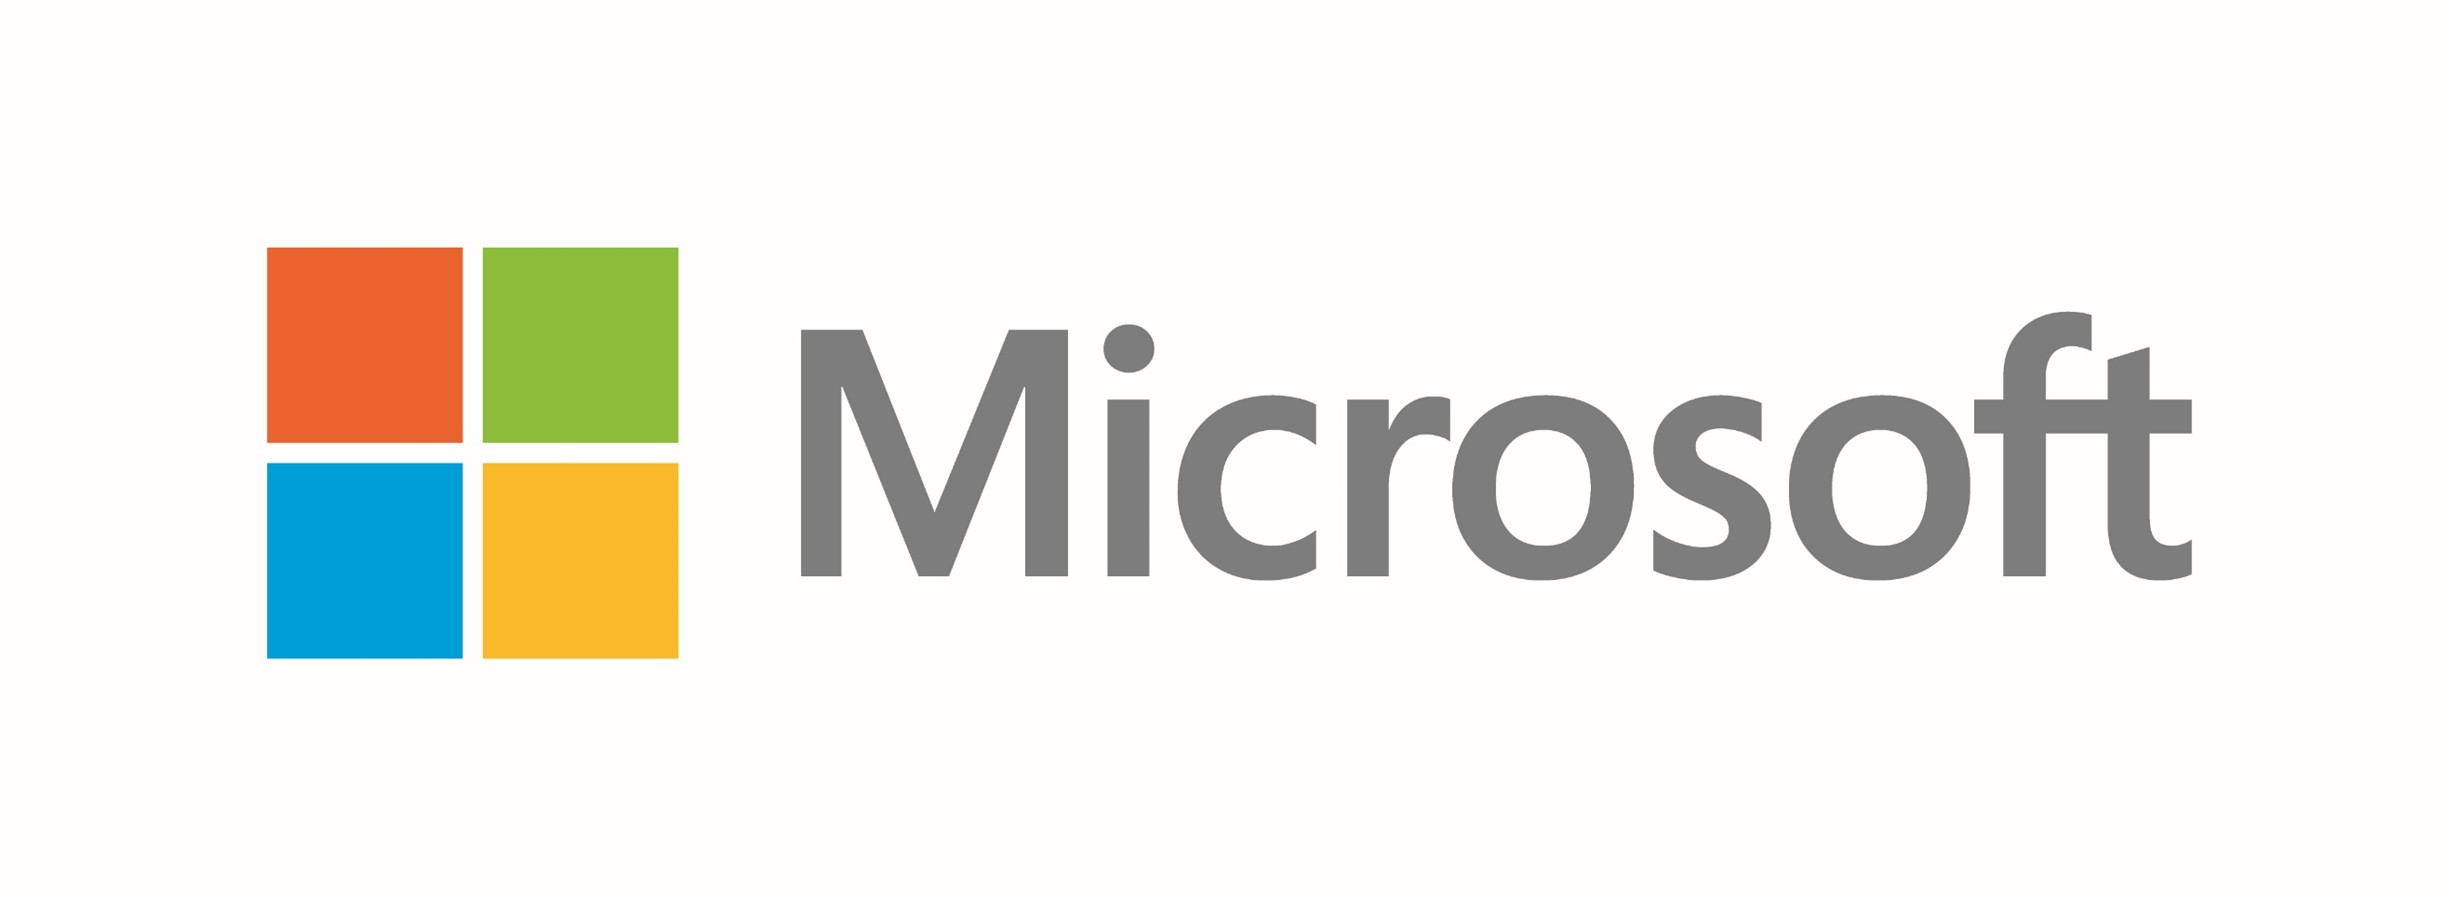 Microsoft Logo JPEG